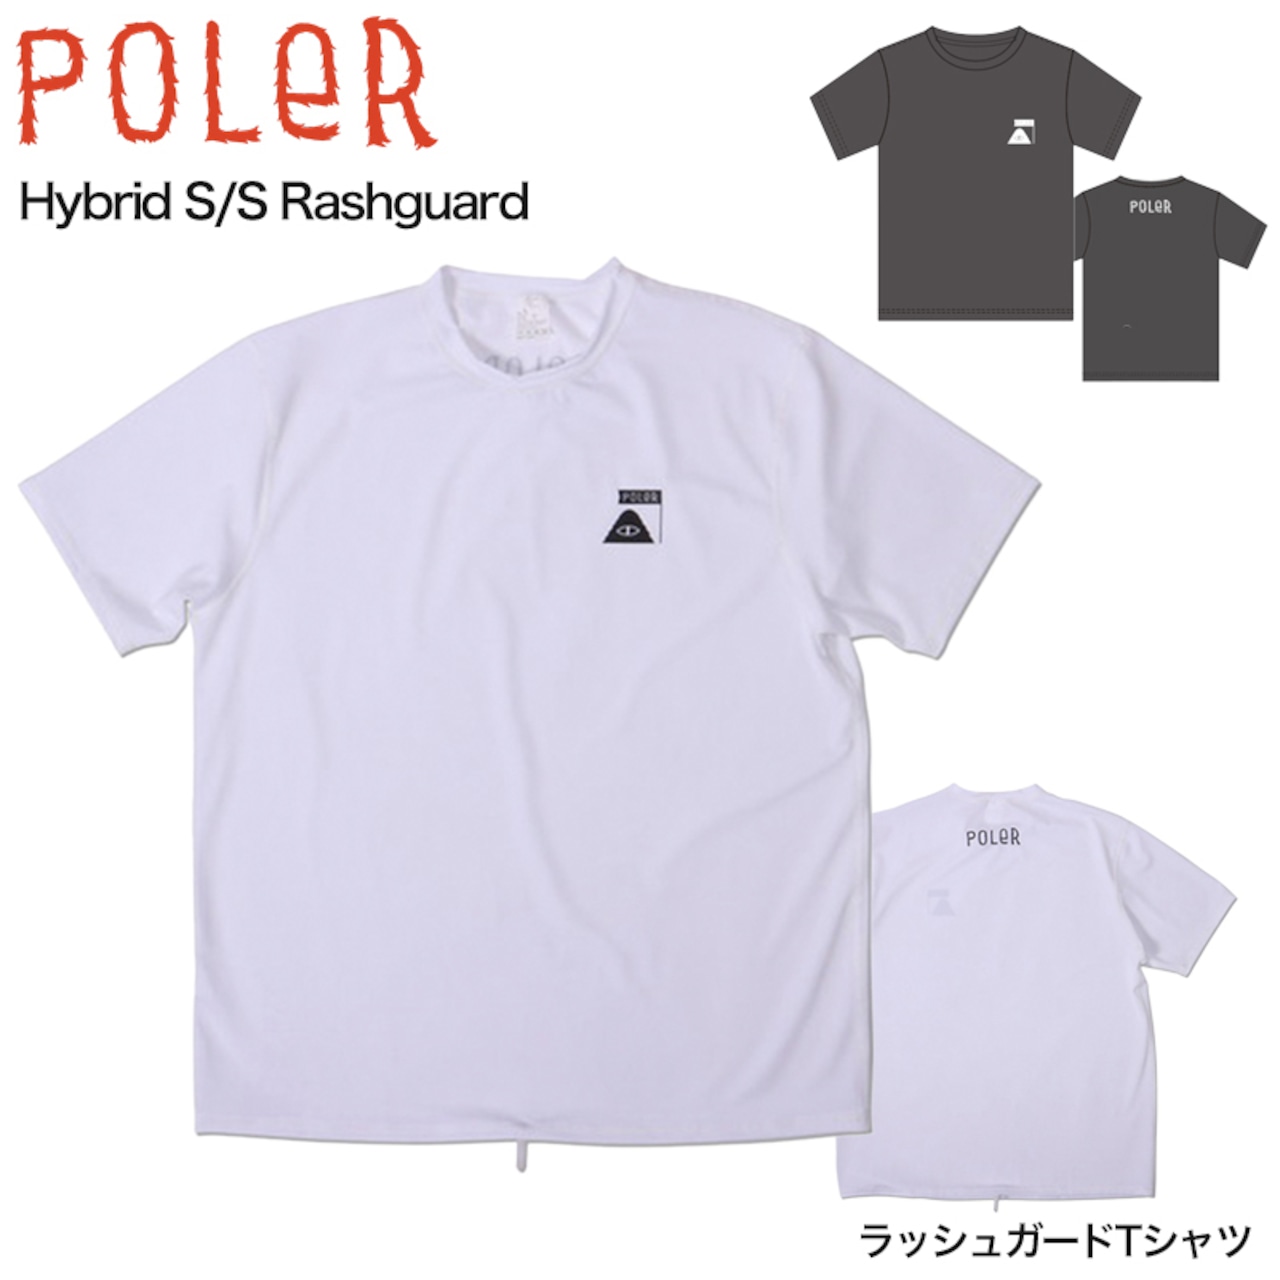 POLeR ポーラー Hybrid S/S Rashguard ラッシュガード Tシャツ 半袖